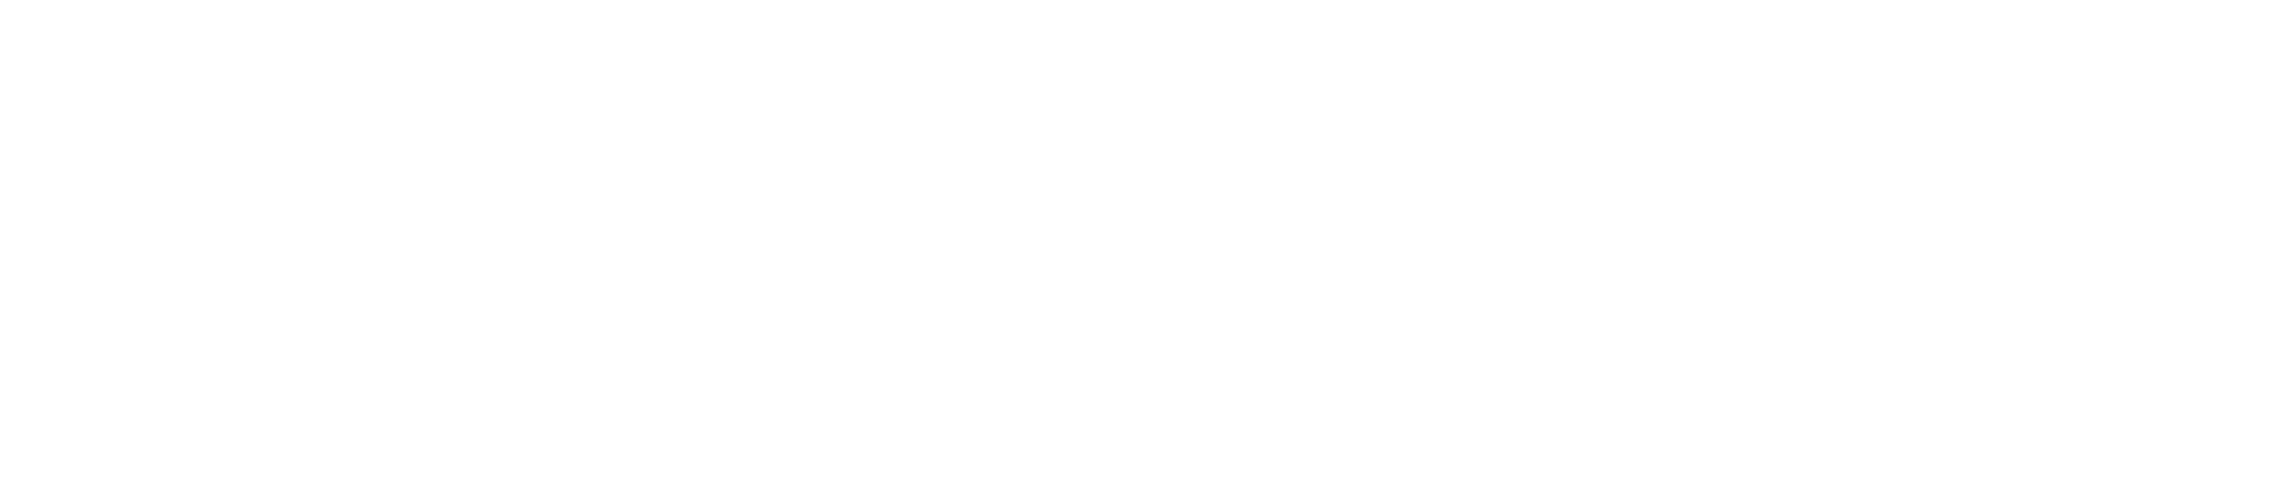 biggerband-logo-tagline